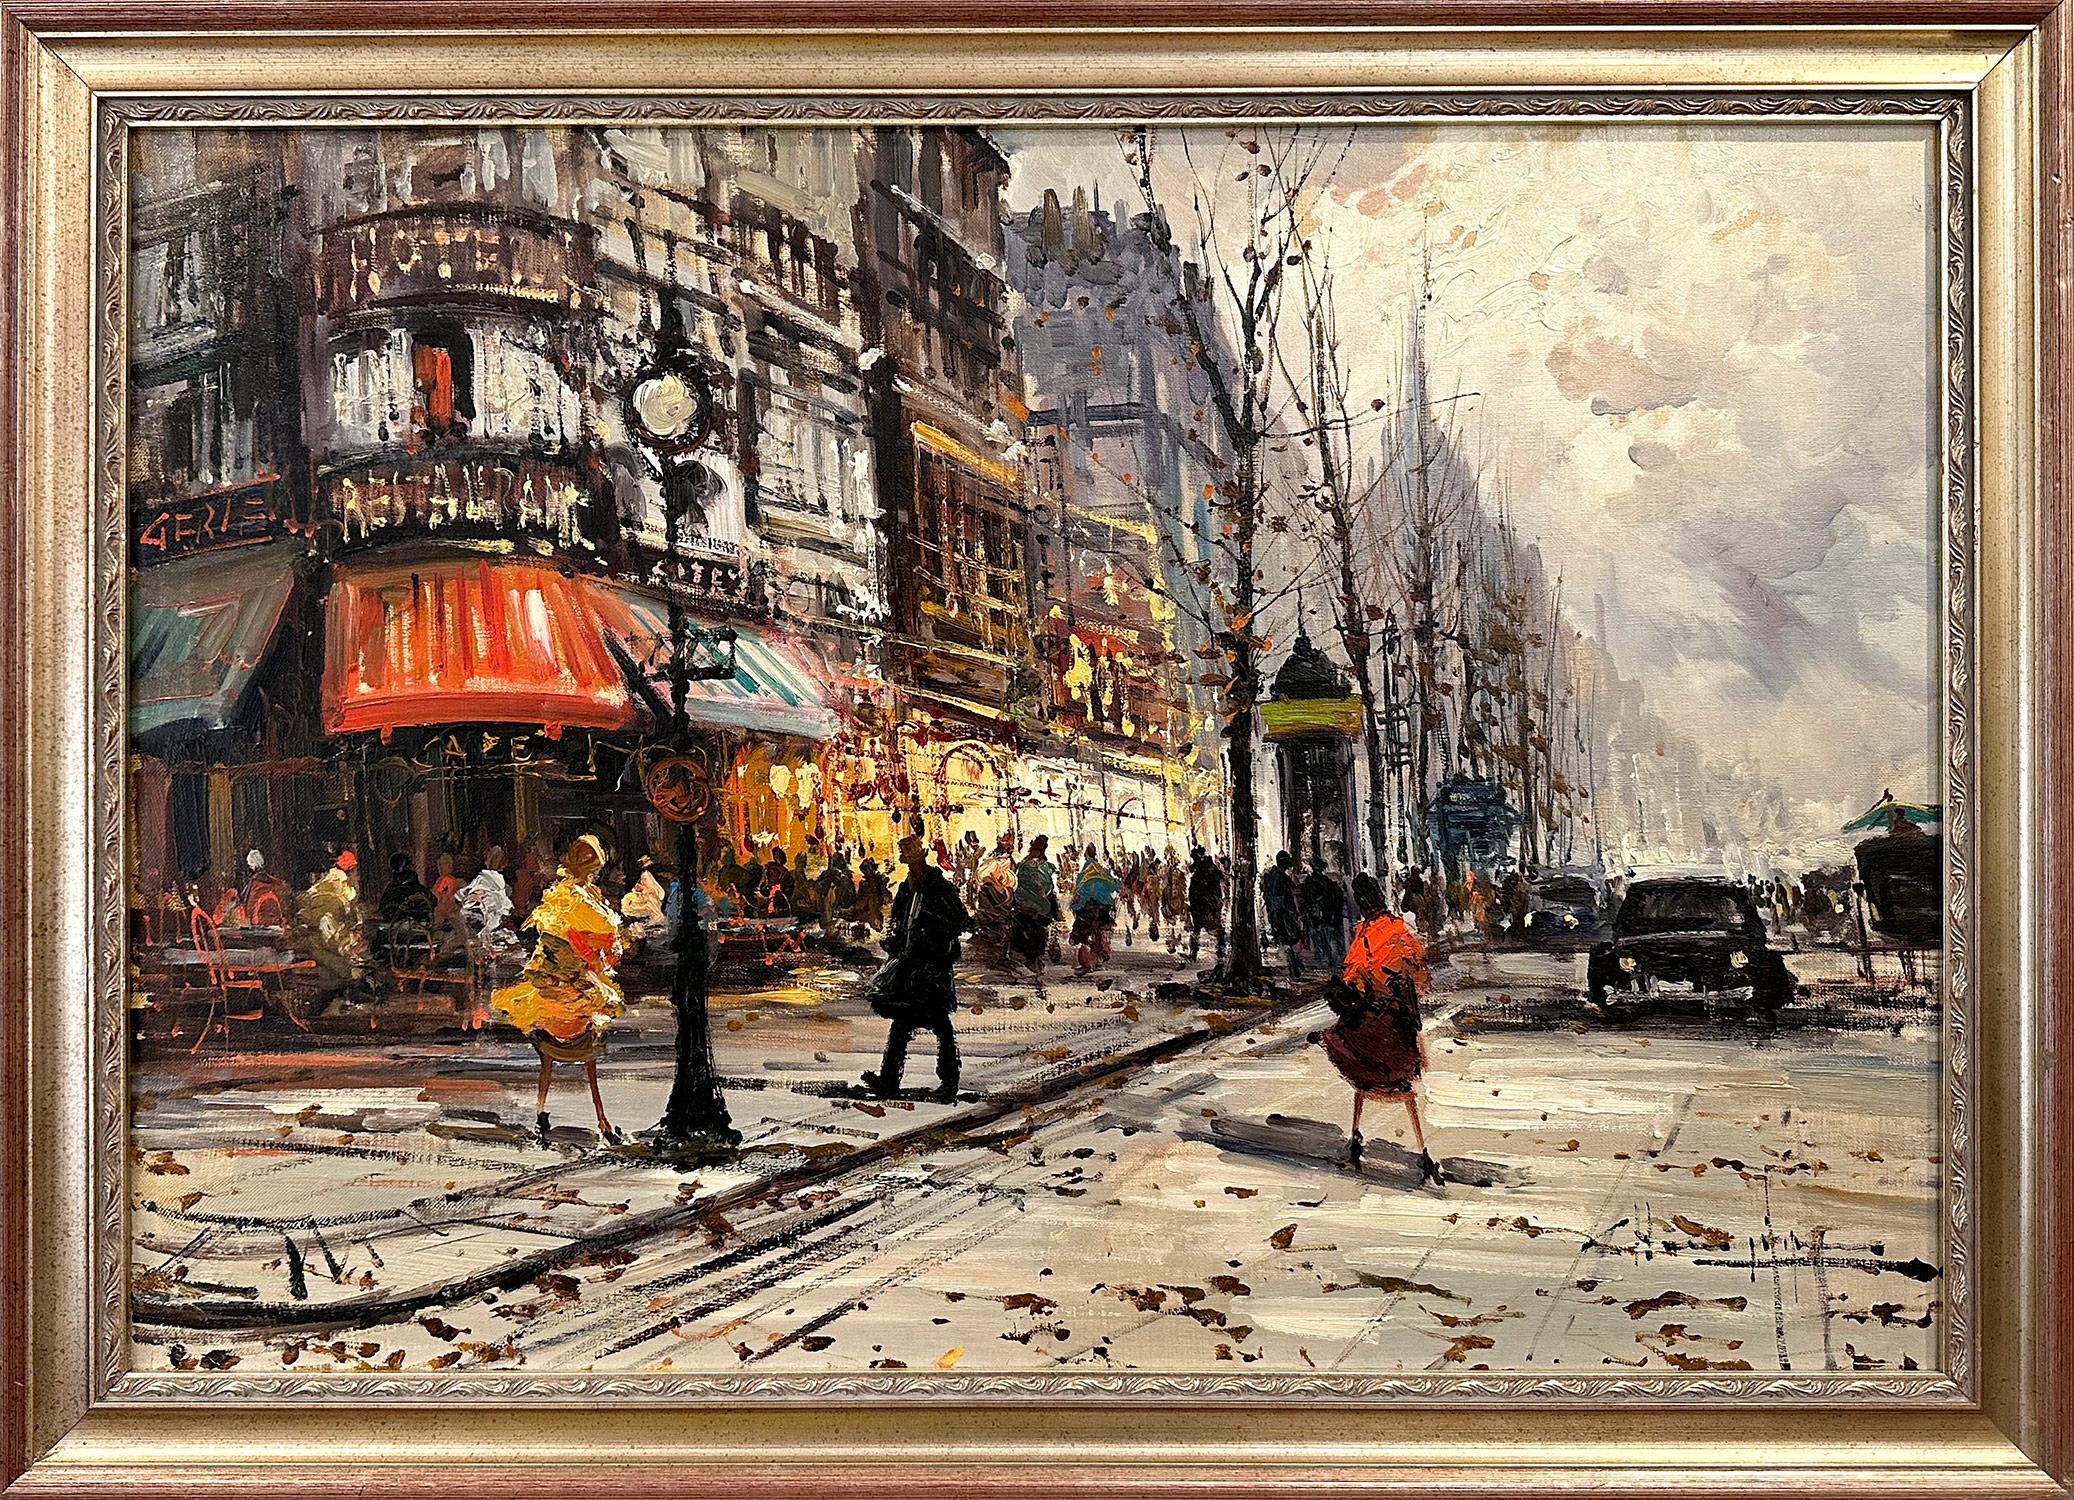 R. Champignon Figurative Painting - "Parisian Cafe Street Scene" 20th Century Post-Impressionist Oil Paint Canvas